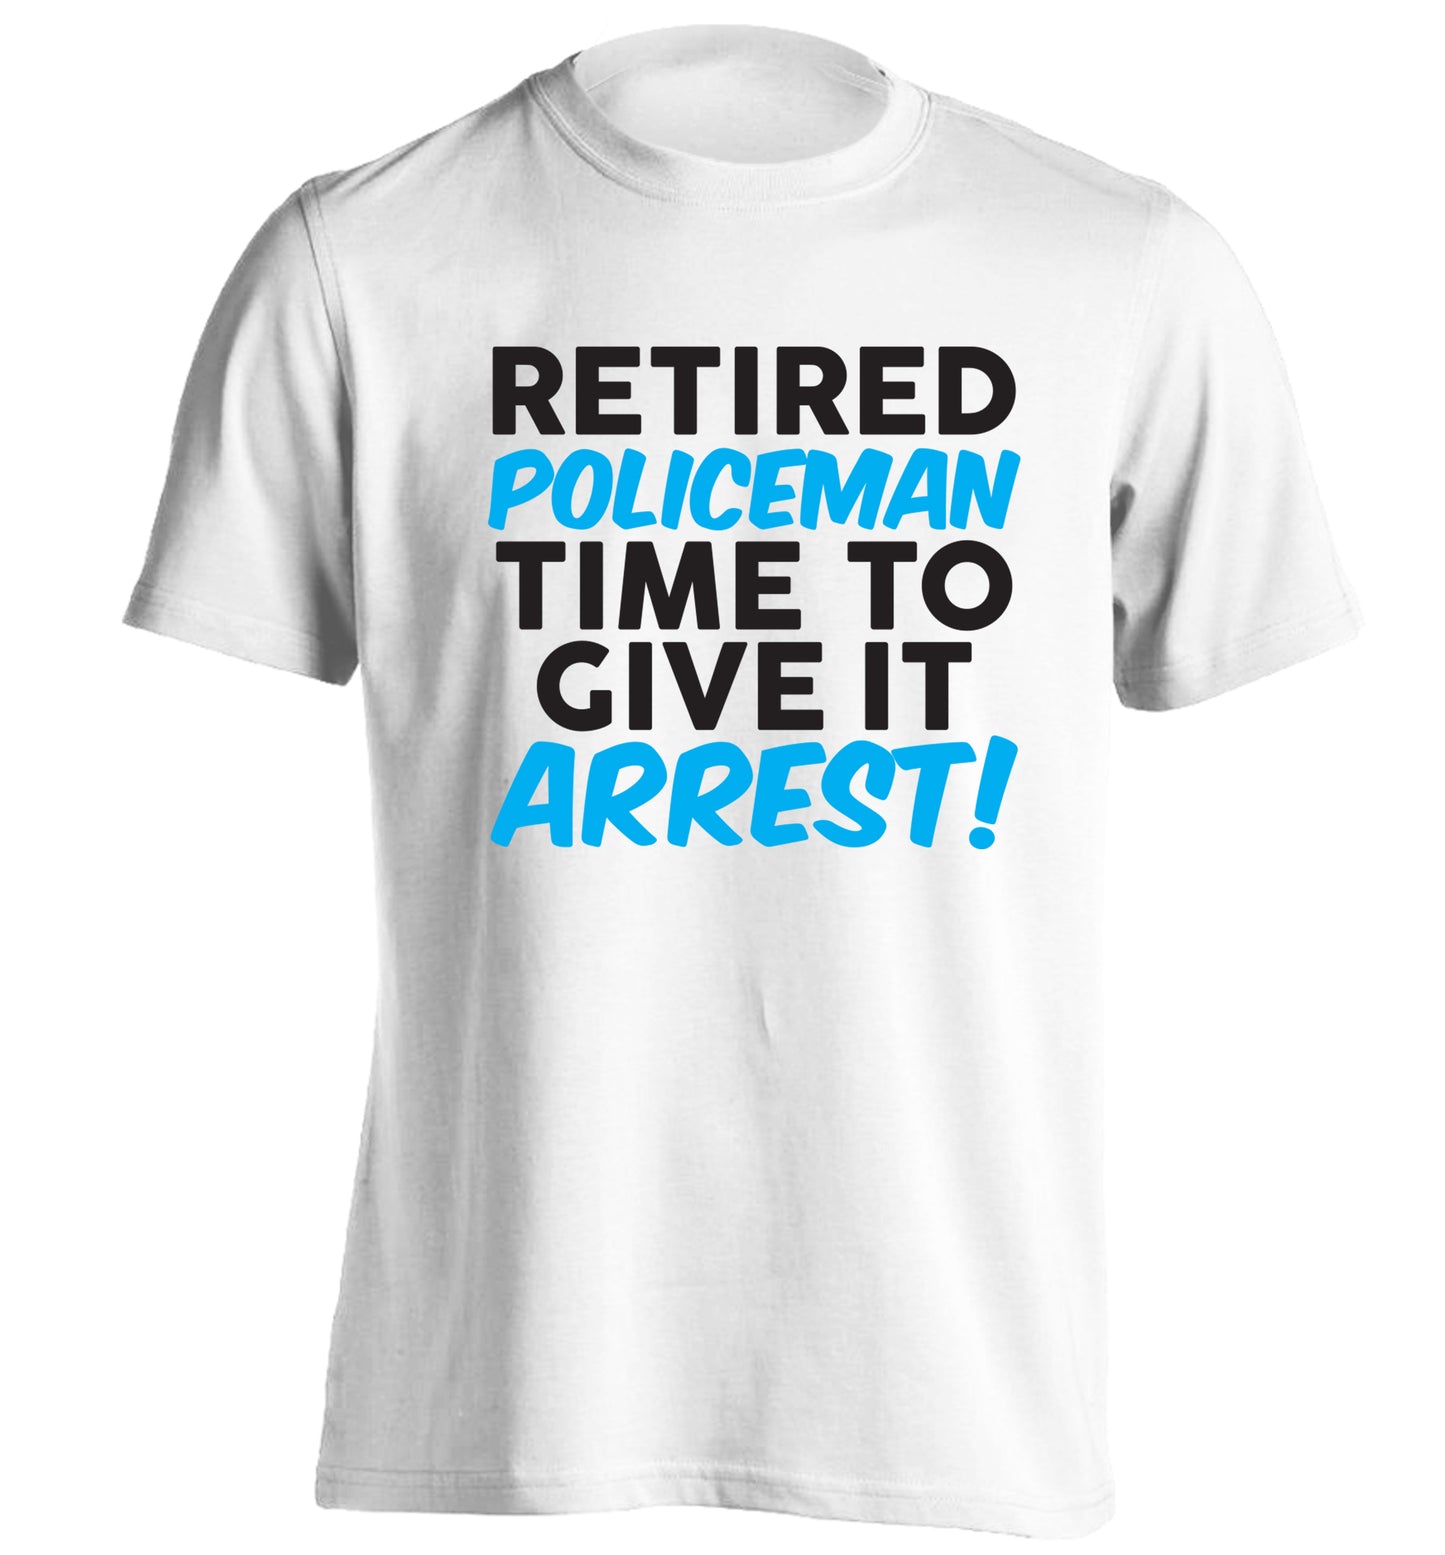 Retired policeman give it arresst! adults unisex white Tshirt 2XL